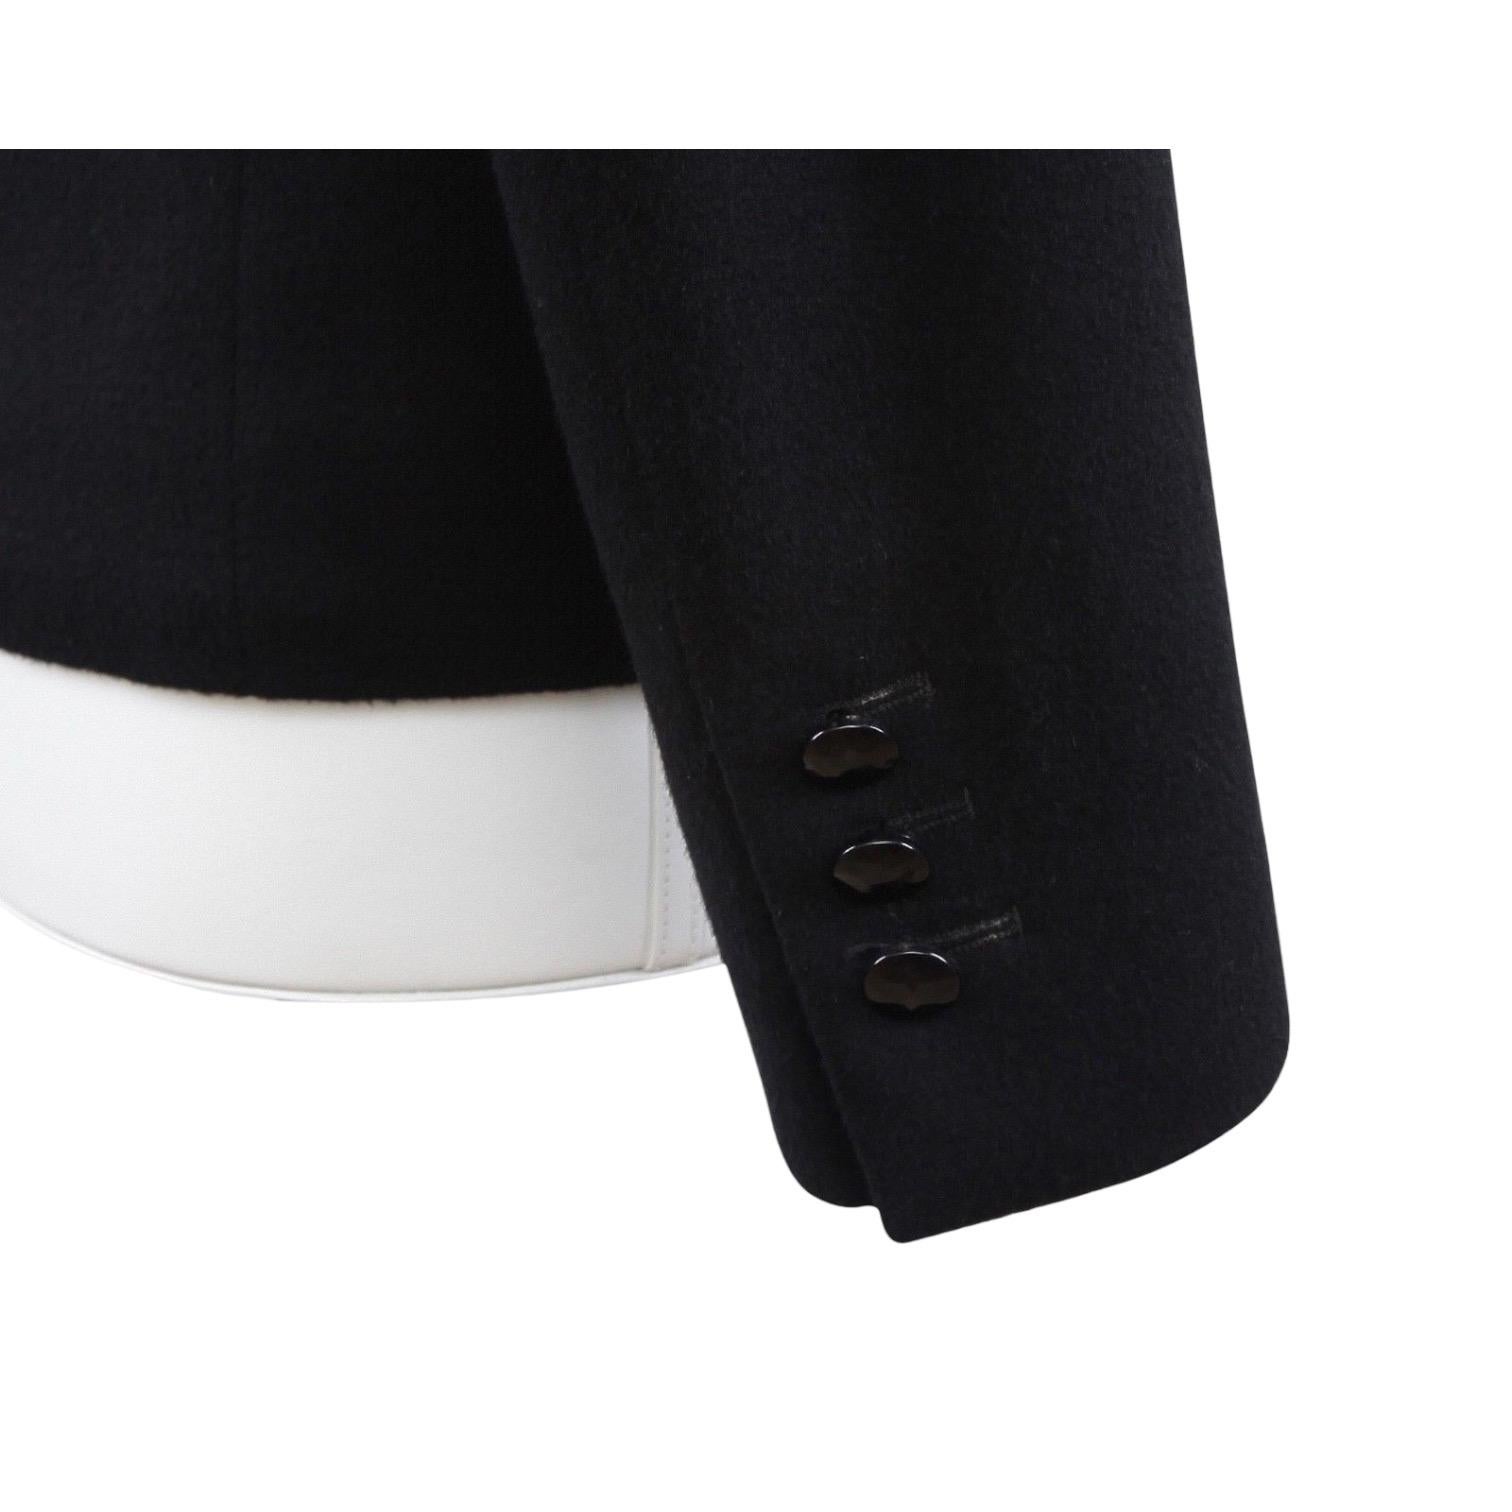 GIANNI VERSACE Jacket Blazer Double Breasted Wool Black Long Sleeve 4 38 VINTAGE For Sale 2